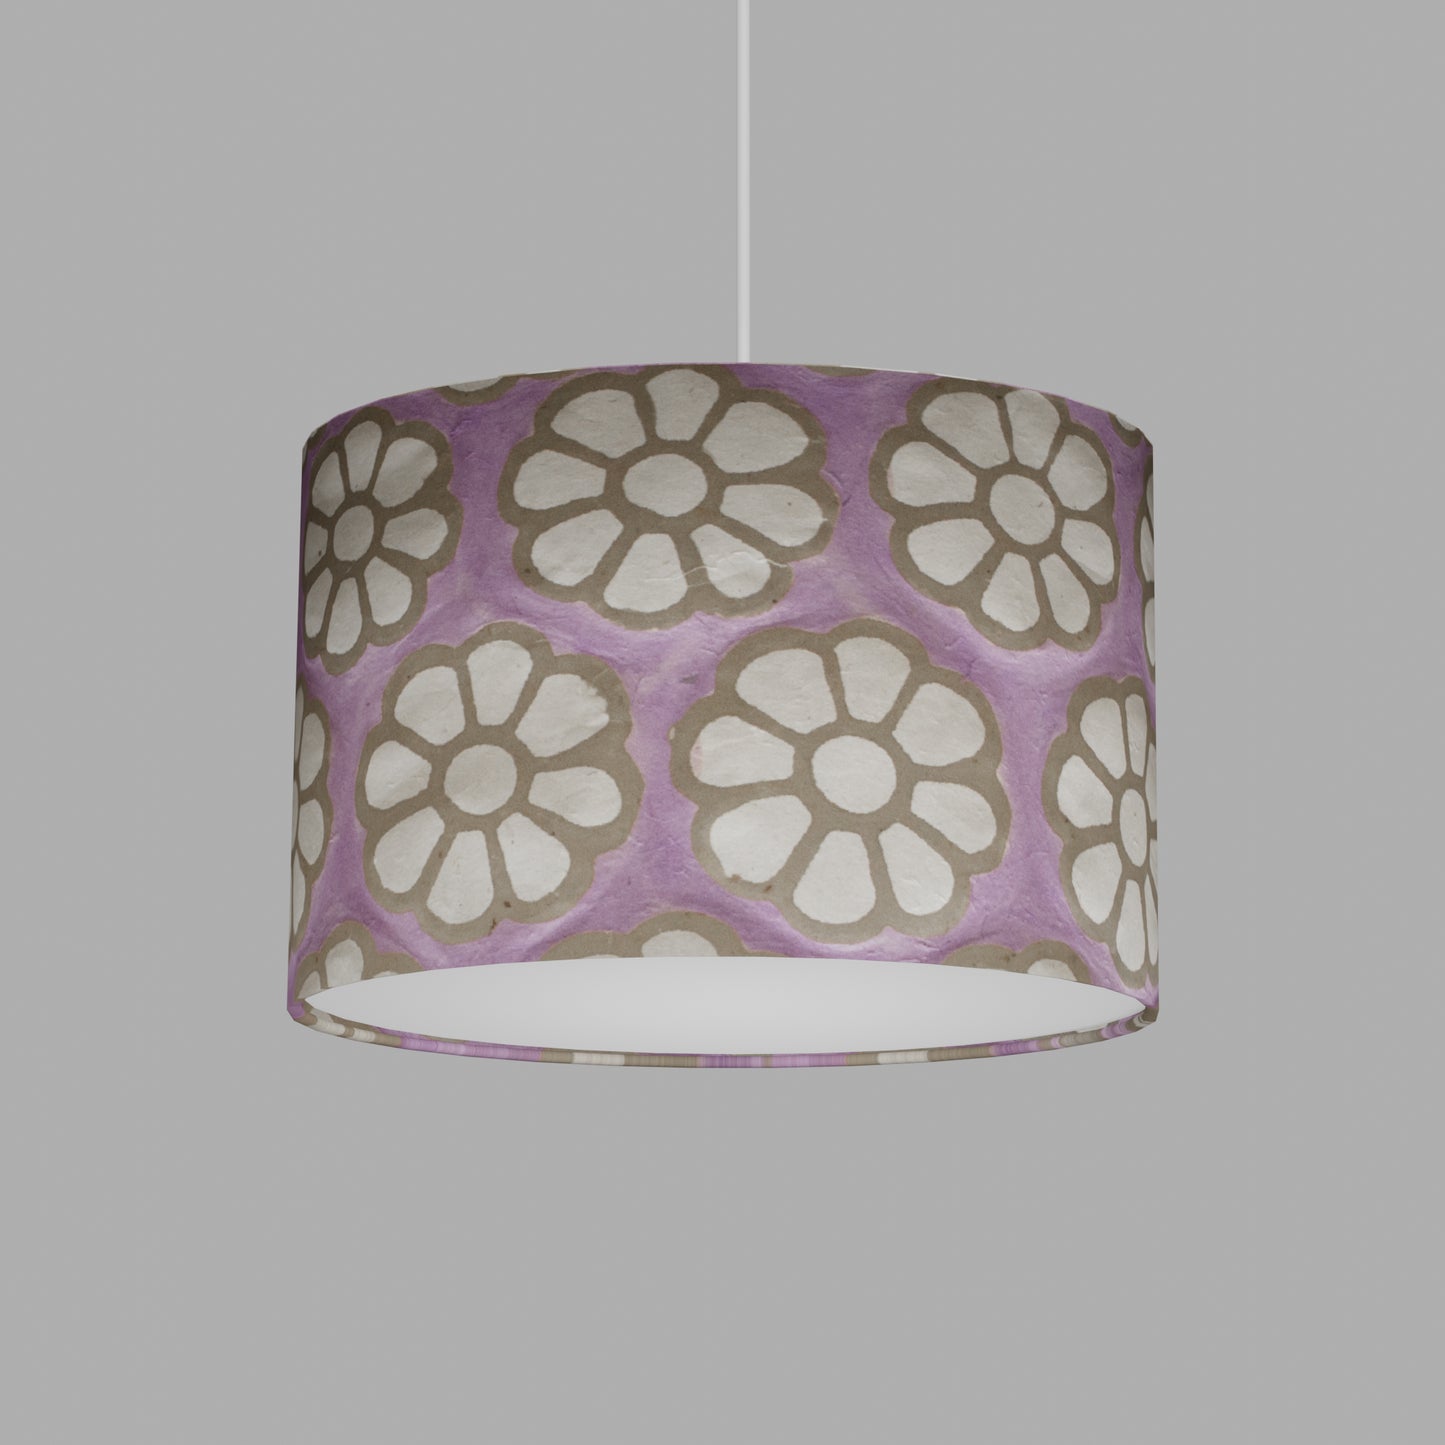 Oval Lamp Shade - P21 - Batik Big Flower on Lilac, 30cm(w) x 20cm(h) x 22cm(d)